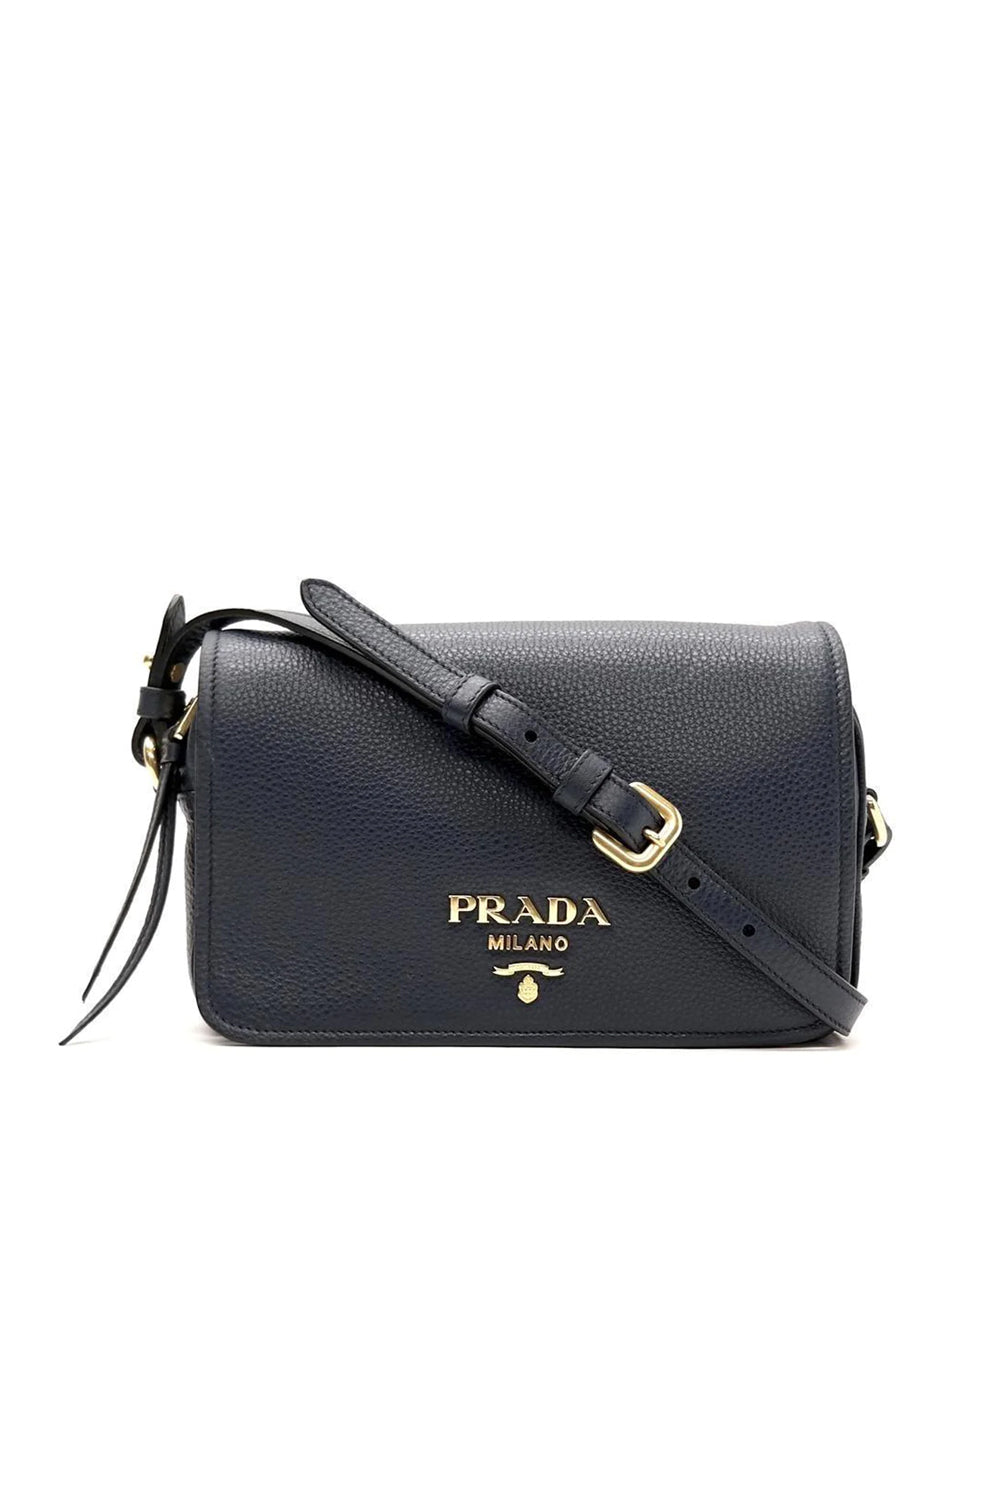 Prada Vitello Phenix Leather Crossbody Bag